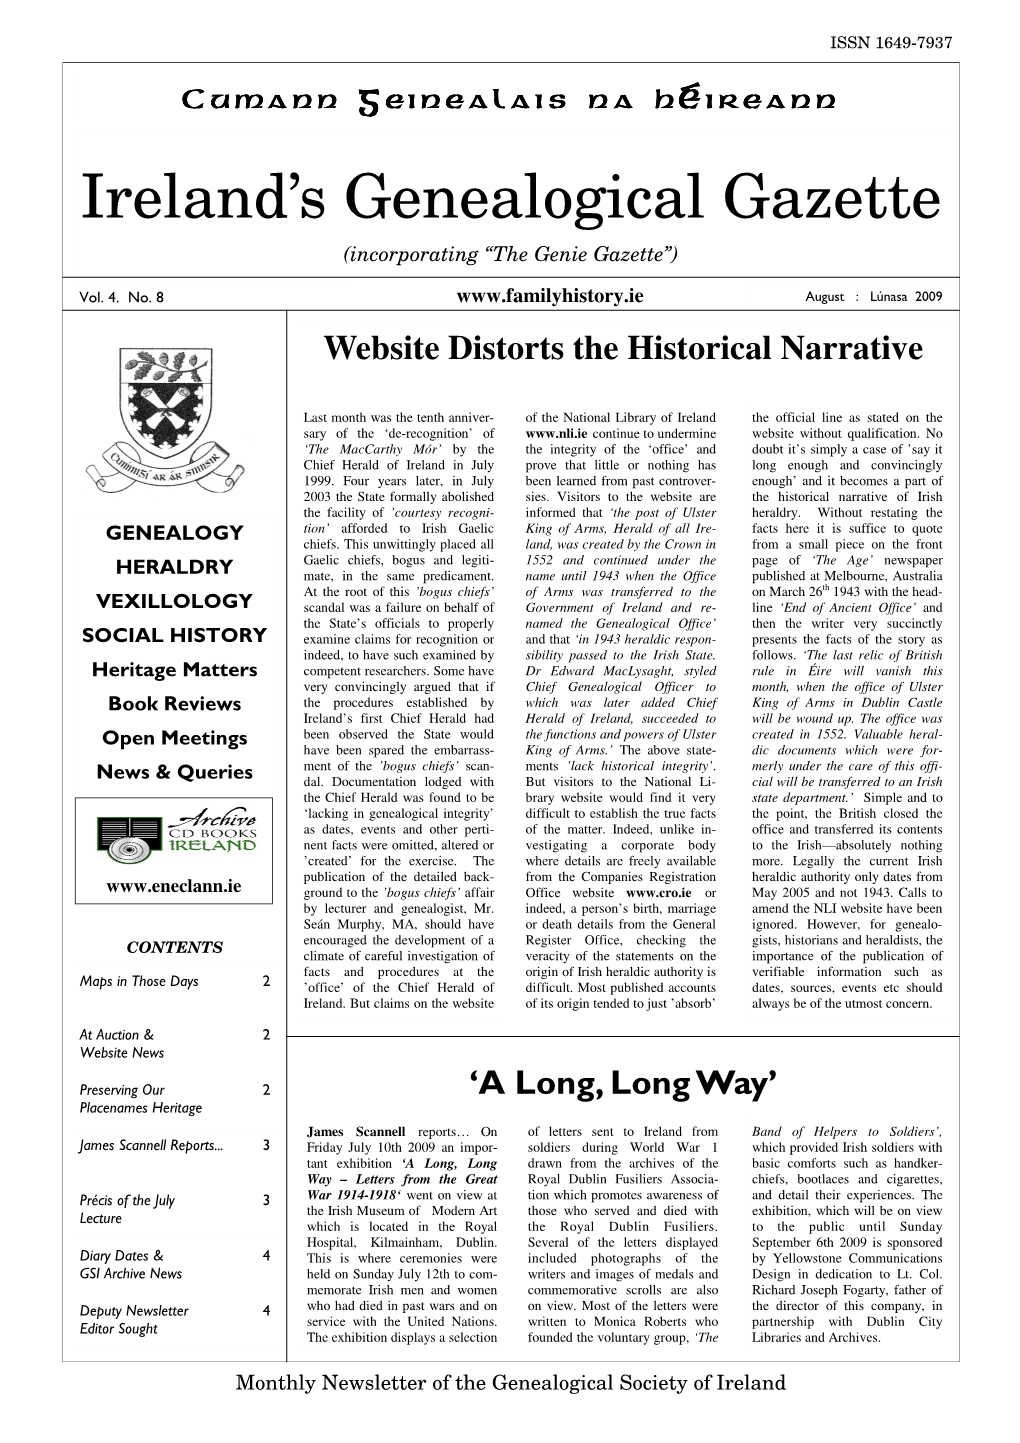 Ireland's Genealogical Gazette \(August-L\372Nasa 2009\).Pub